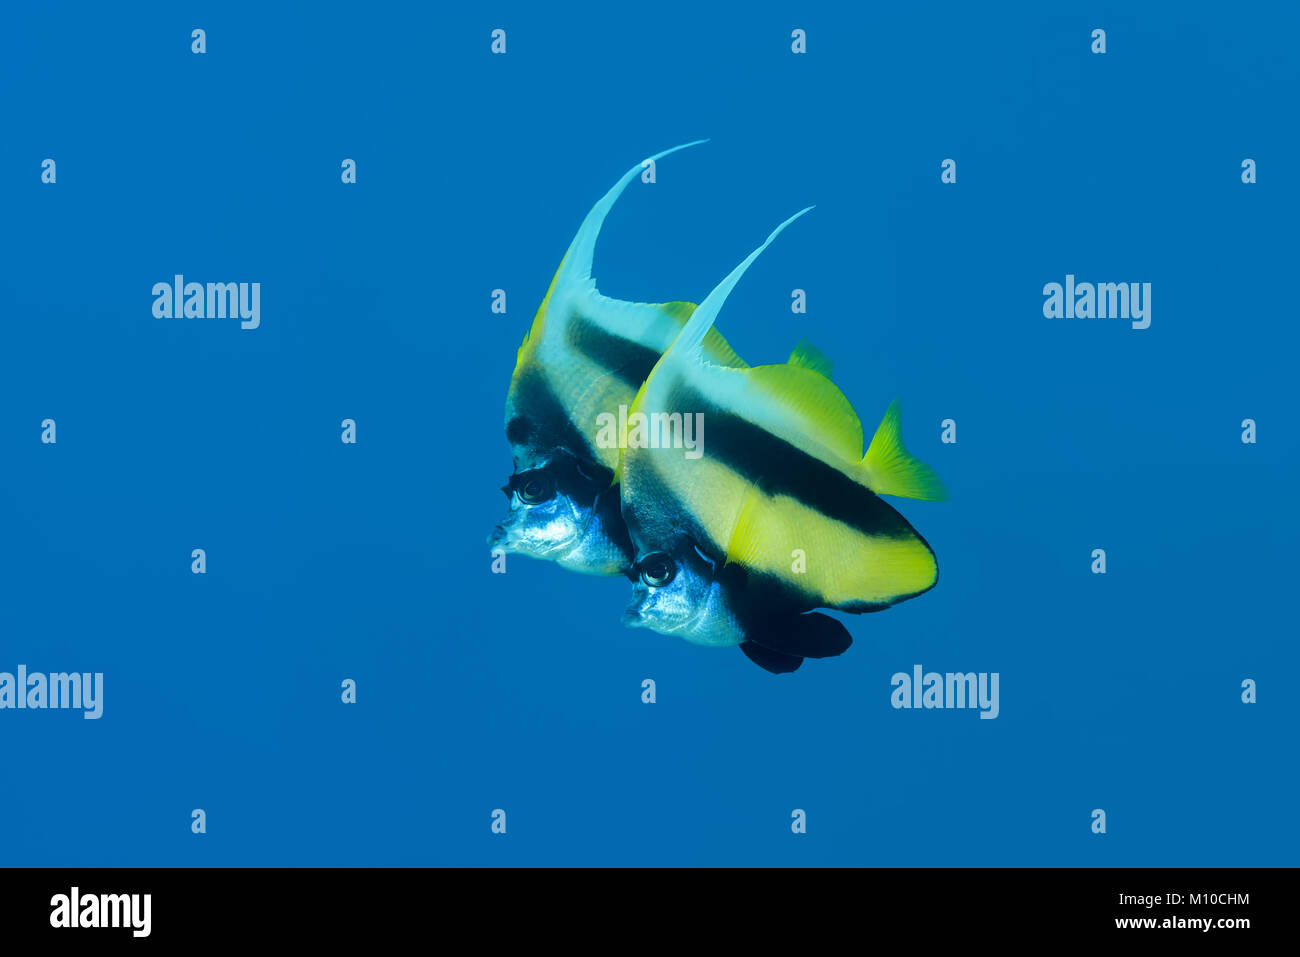 Red Sea, Dahab, Egypt. 12th Nov, 2017. couple Red Sea Bannerfish (Heniochus intermedius) swim in the blue water background Credit: Andrey Nekrasov/ZUMA Wire/ZUMAPRESS.com/Alamy Live News Stock Photo